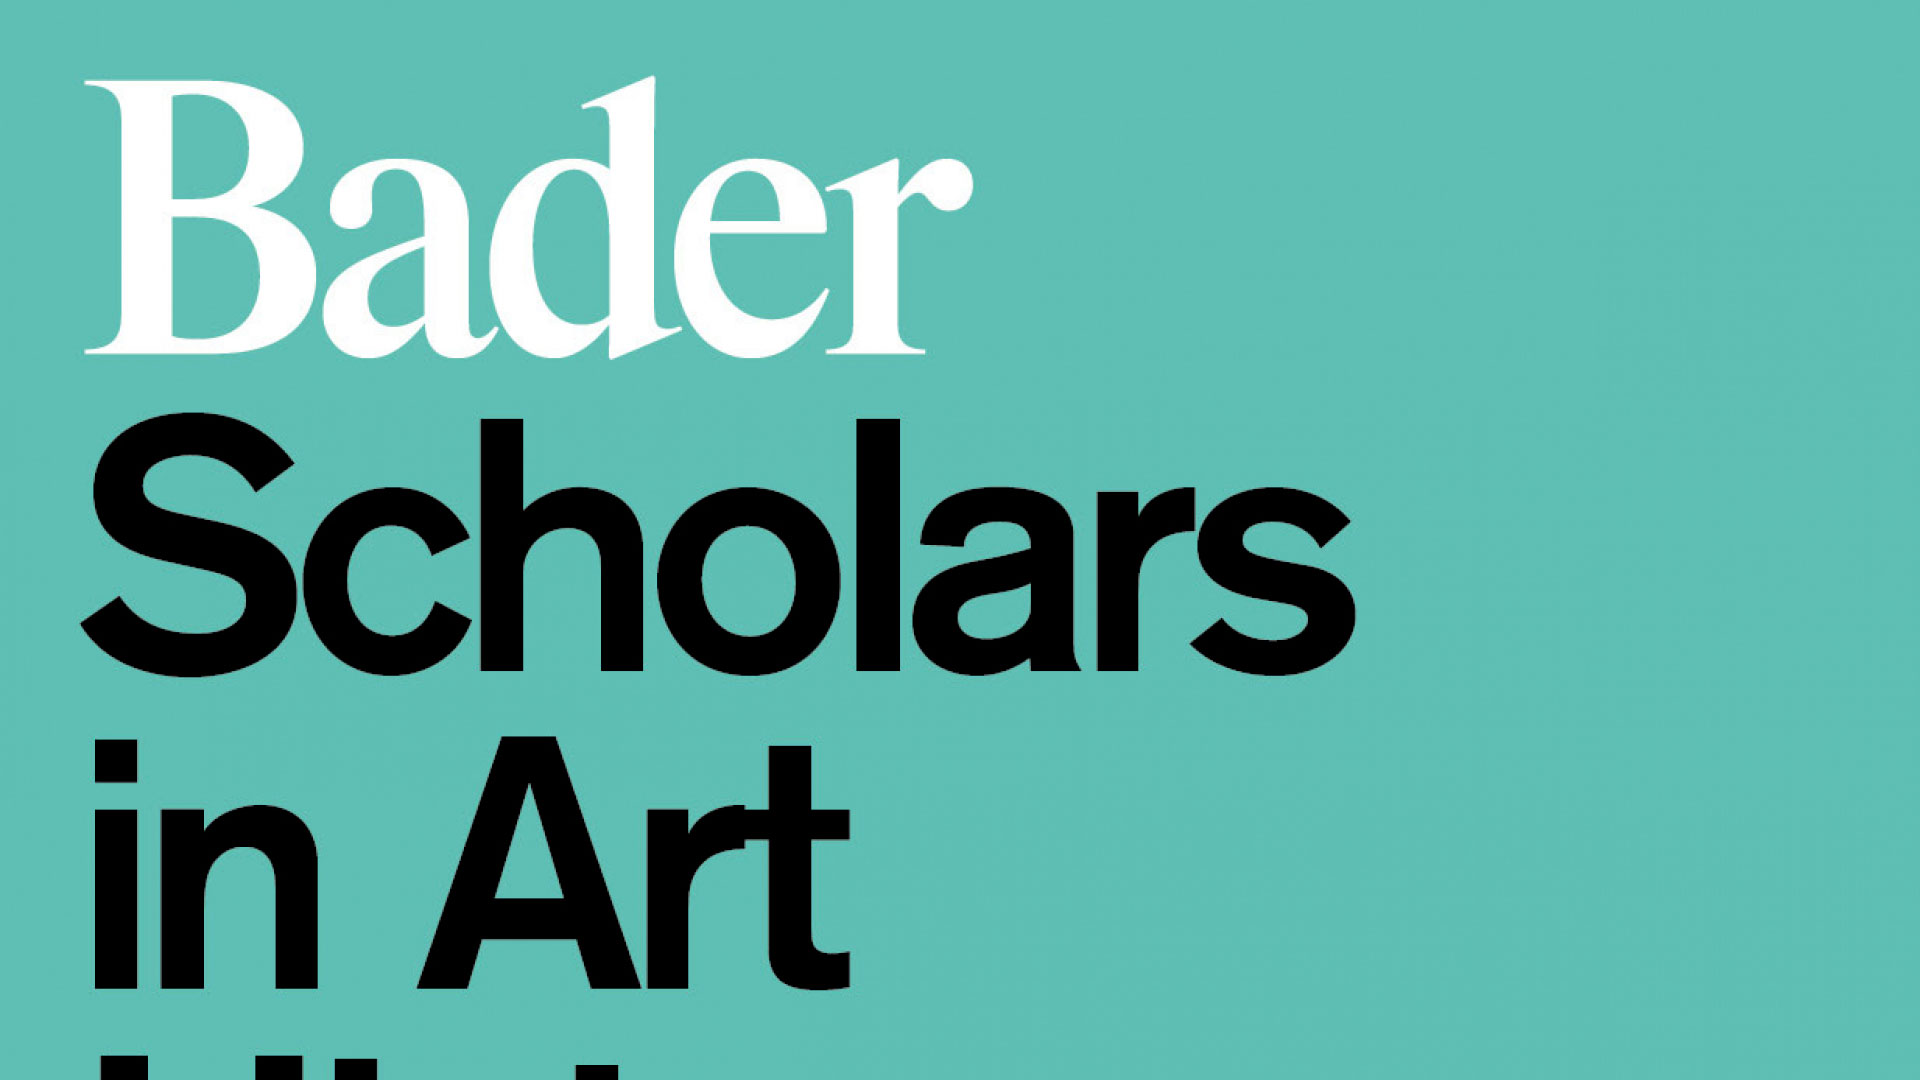 Bader Scholars in Art History